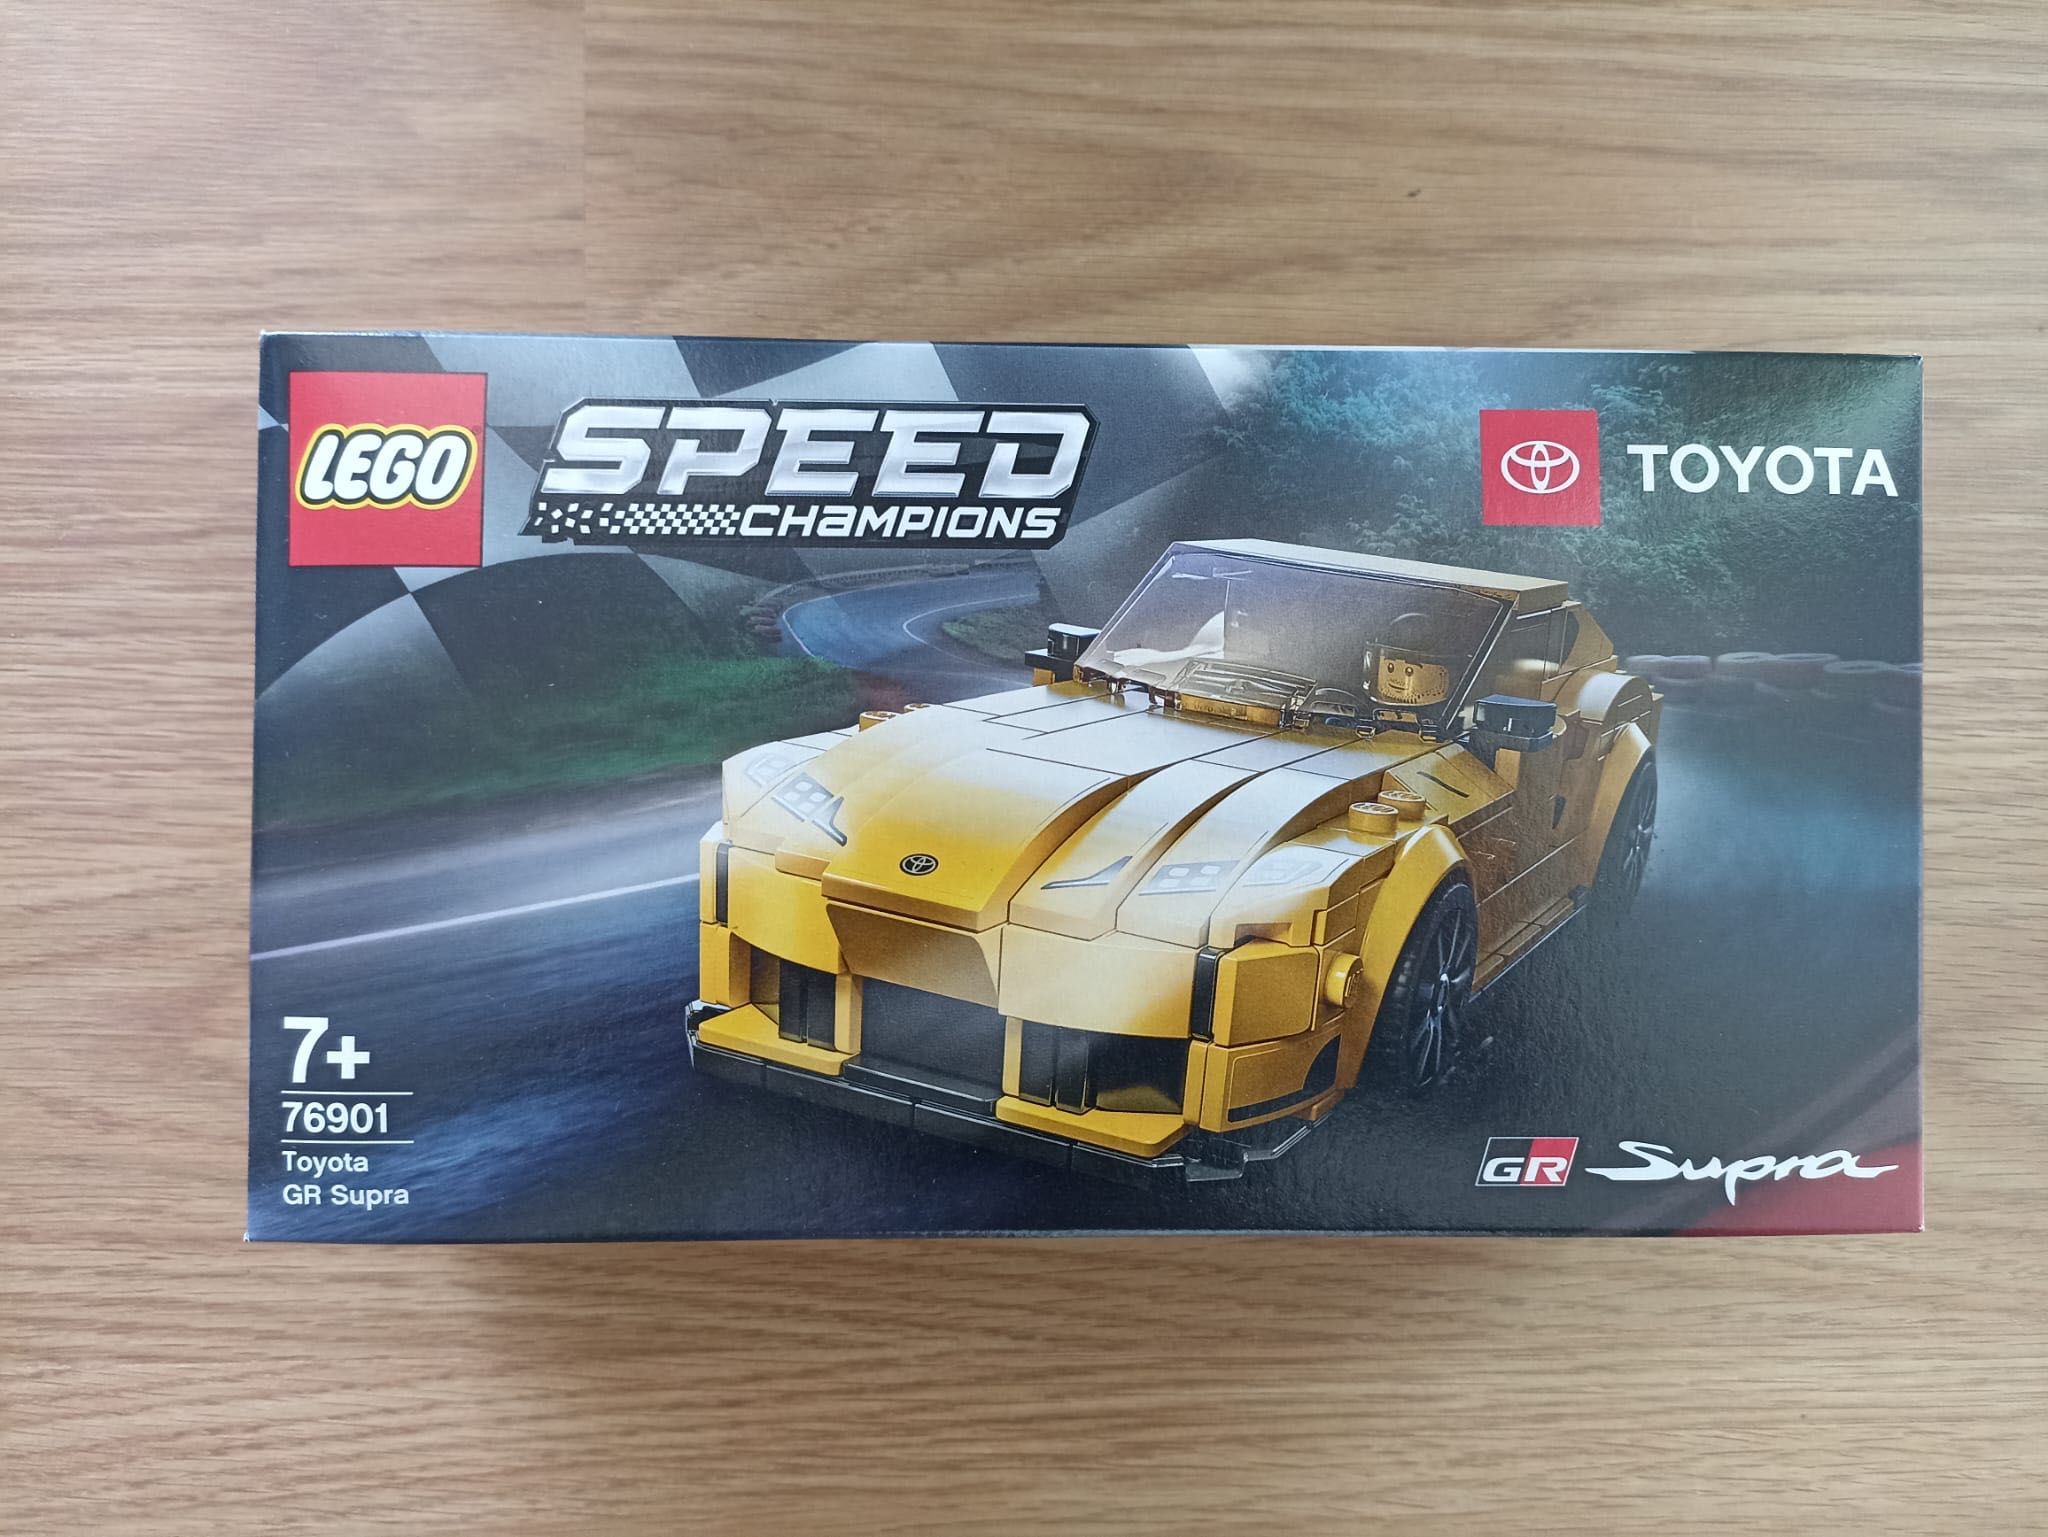 Lego Speed Champions "Toyota Supra" - 76901